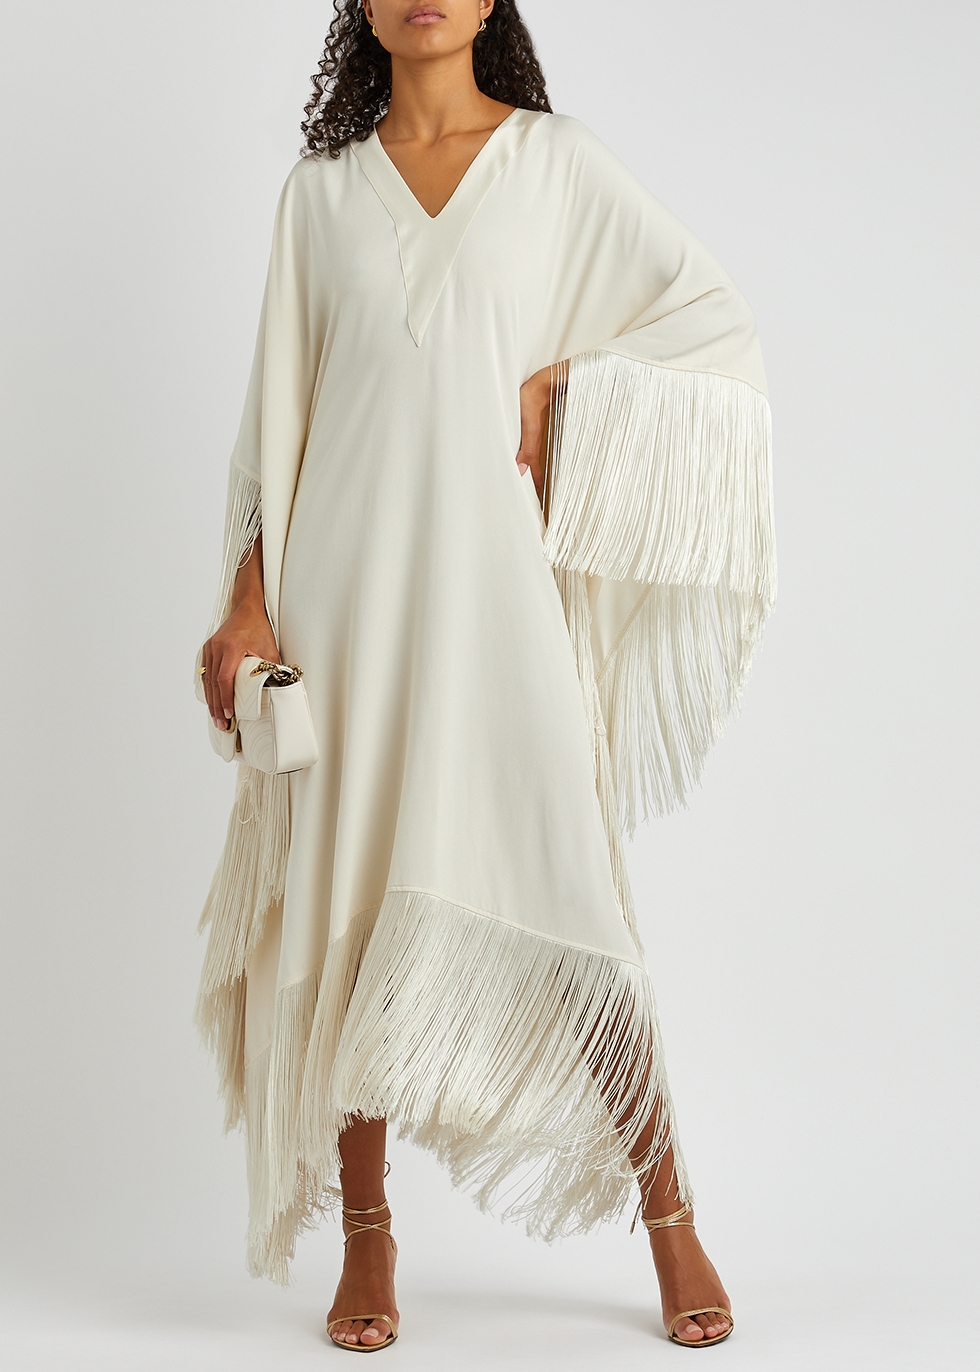 Very Ross ivory fringe-trimmed dress Harvey Nichols Women Clothing Dresses Tunic Dresses 